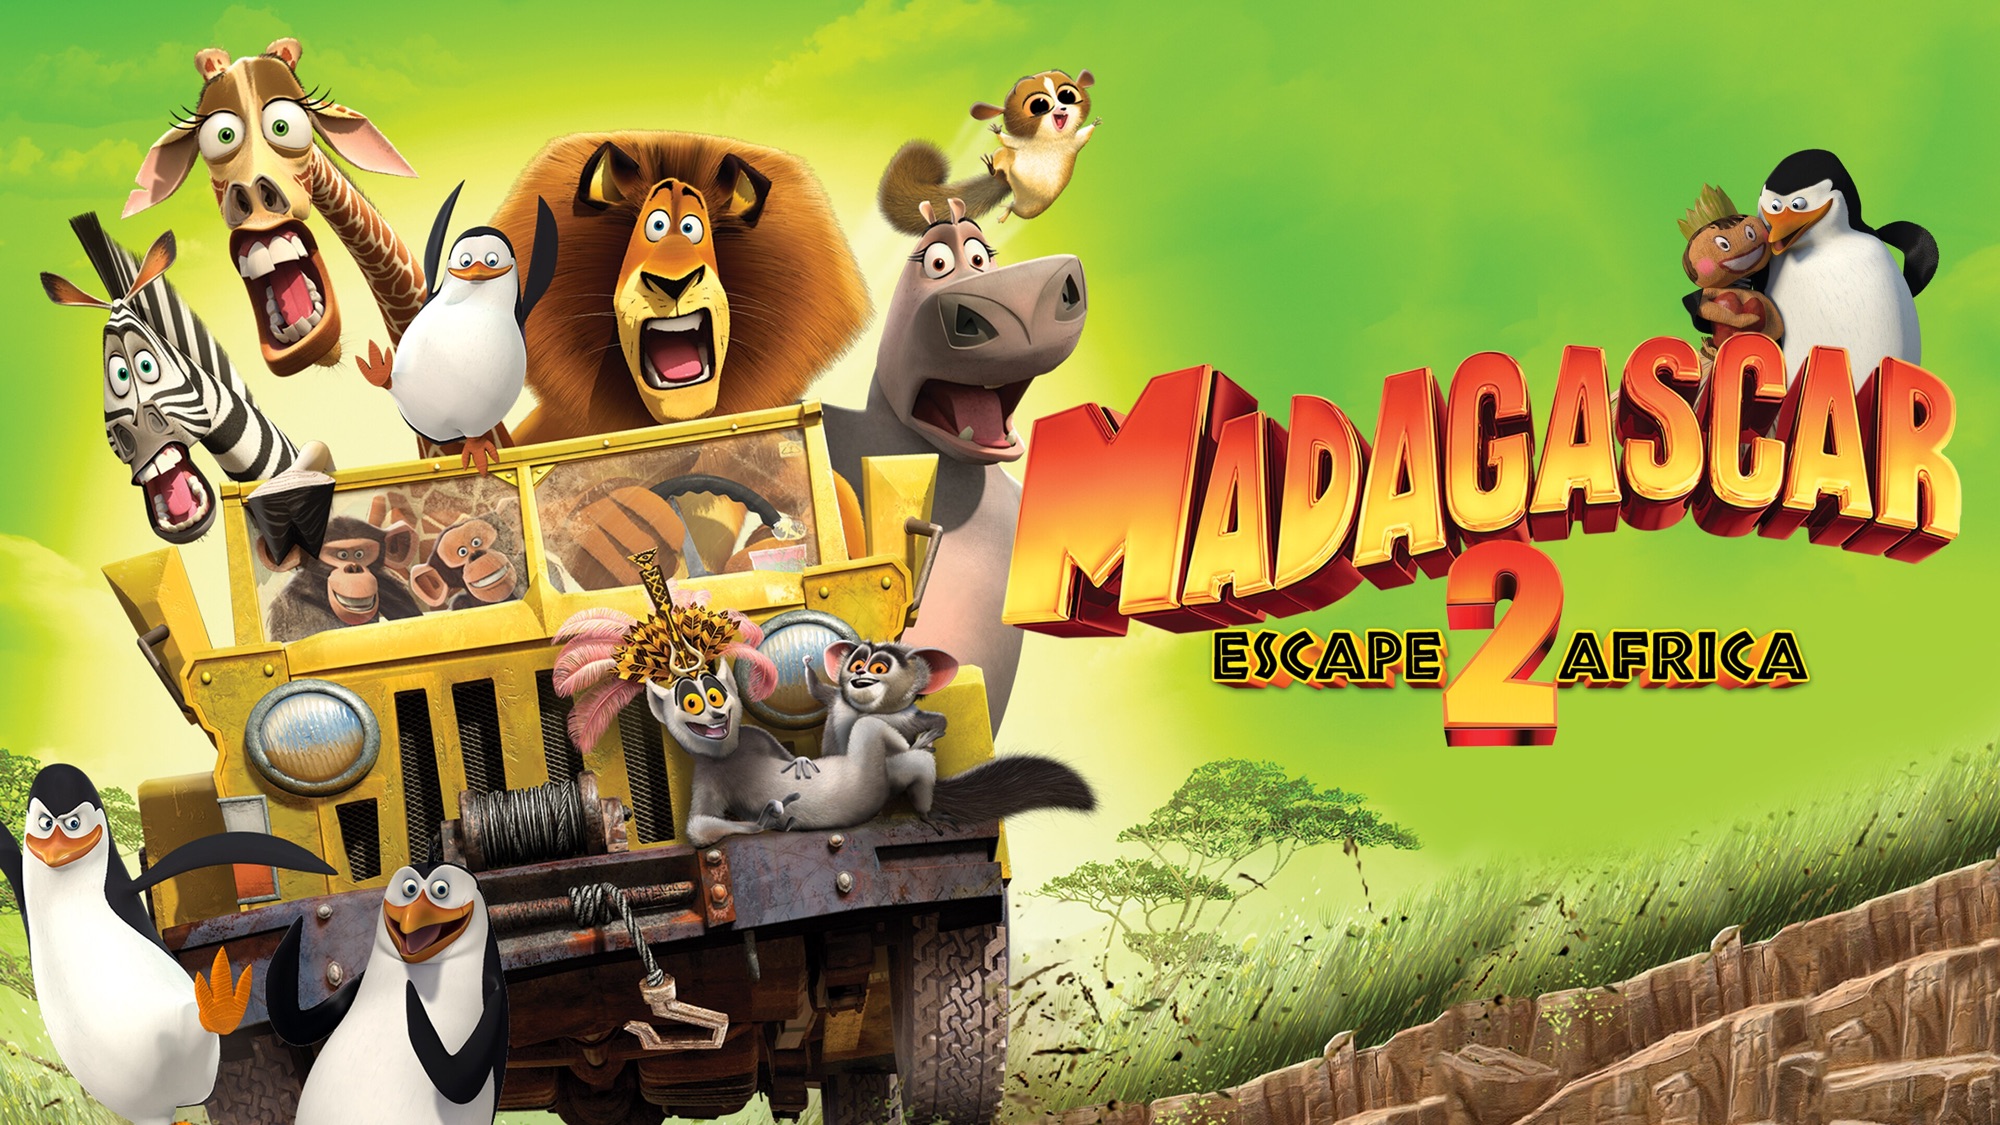 Movie Madagascar: Escape 2 Africa HD Wallpaper | Background Image